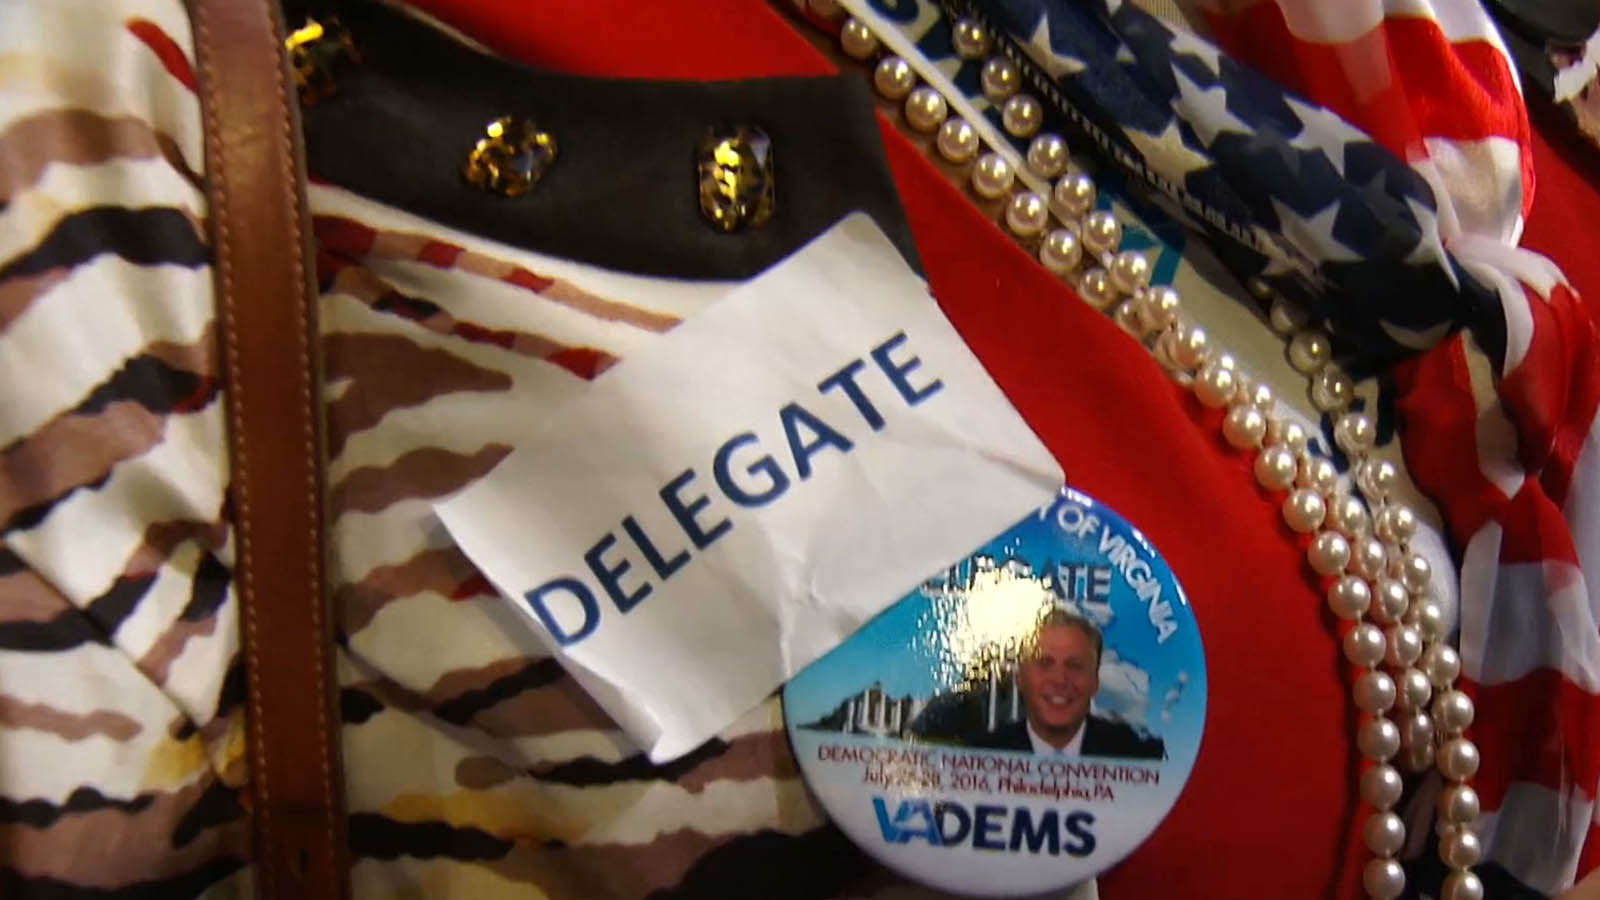 A display of diversity among Democratic delegates